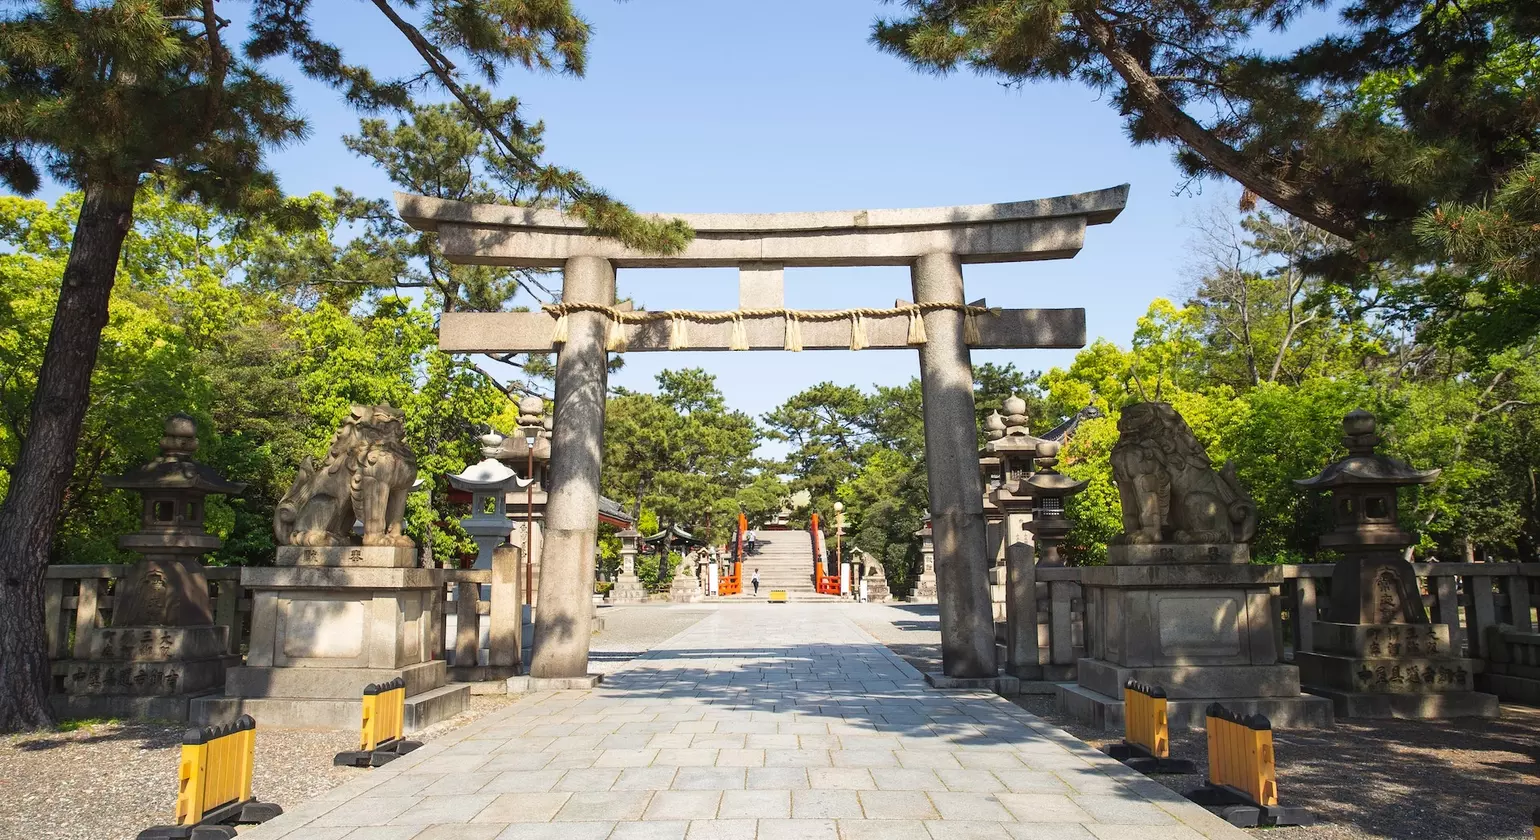 Japonya & Kore Turu Mistik Rotalar (2023)